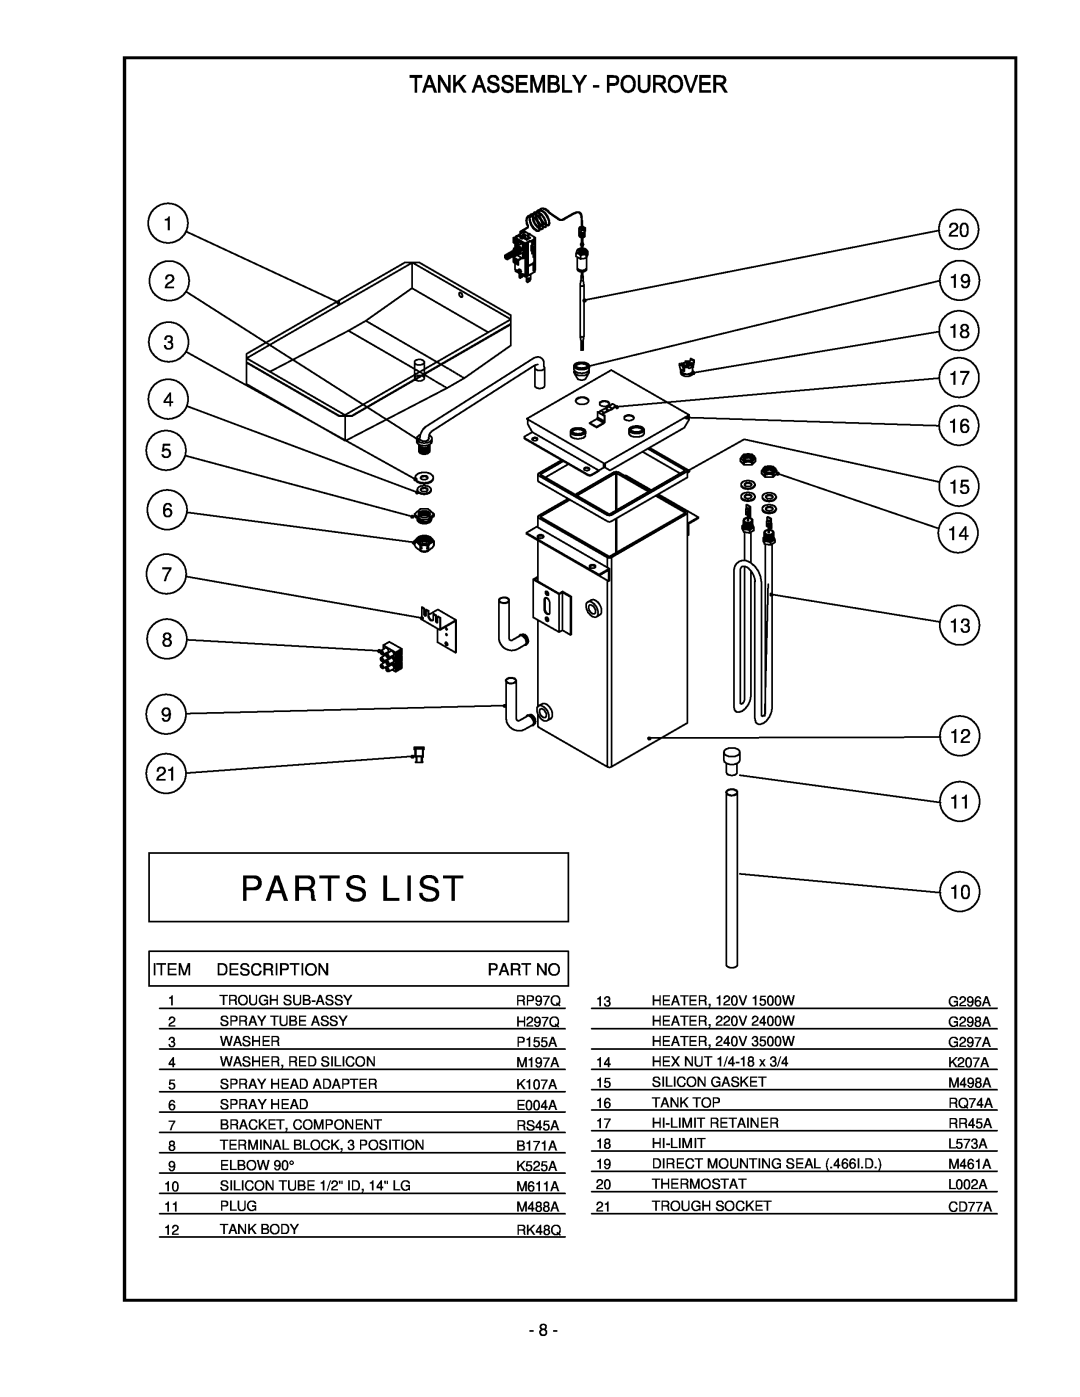 Cecilware 2000 manual Parts List, 1 2 3 4 5 6 7 8, 20 19 18 17 16 15 14, Description 